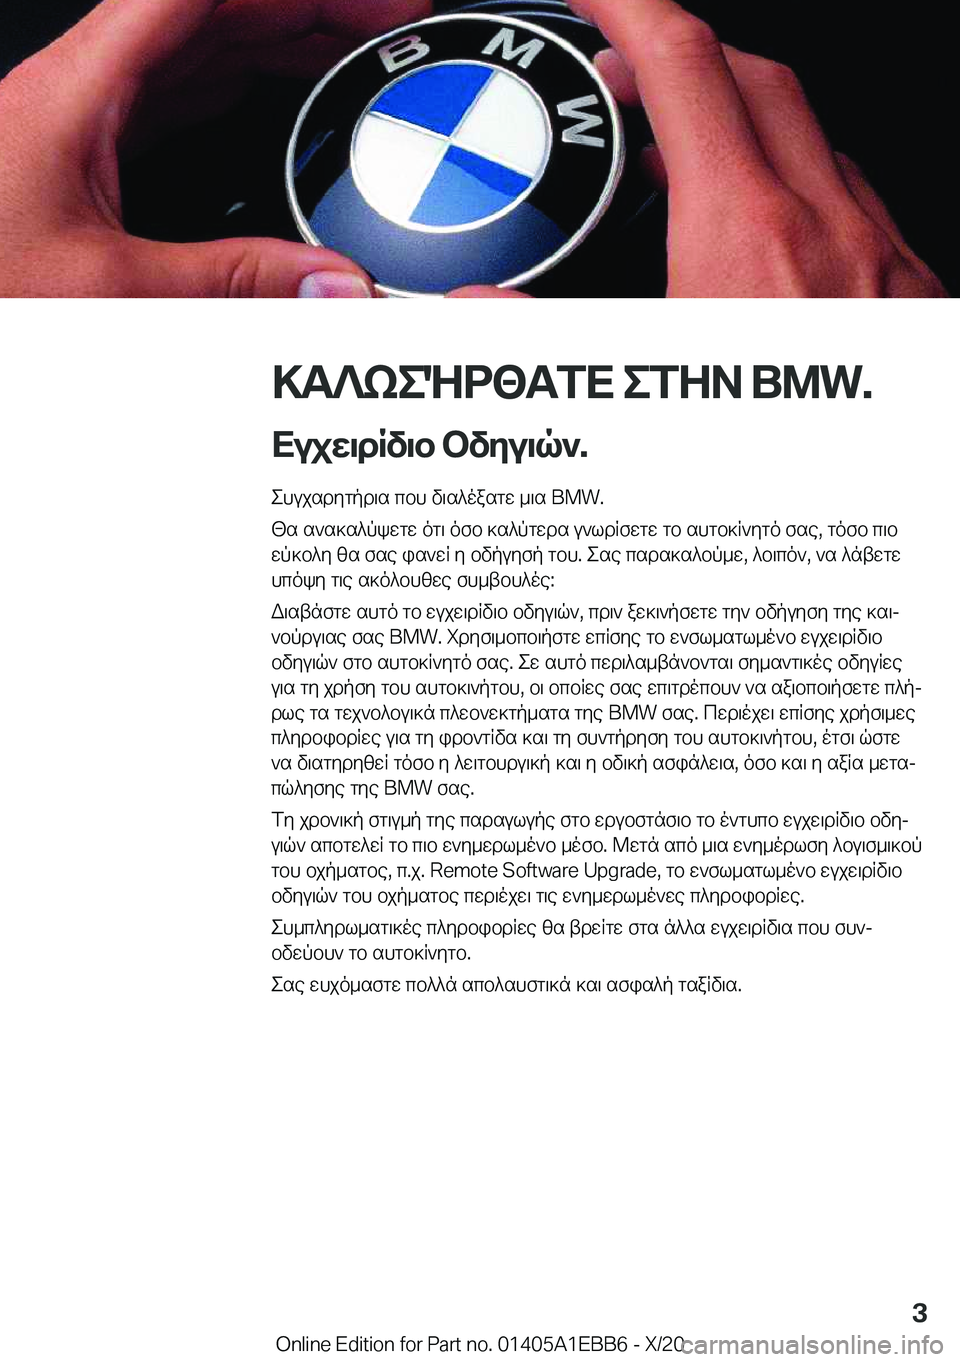 BMW 3 SERIES 2021  ΟΔΗΓΌΣ ΧΡΉΣΗΣ (in Greek) >T?keNd<TfX�efZA��B�M�W�.
Xujw\dRv\b�bvyu\q`�. ehujsdygpd\s�cbh�v\s^oasgw�_\s��B�M�W�.
[s�s`s]s^pkwgw�og\�ofb�